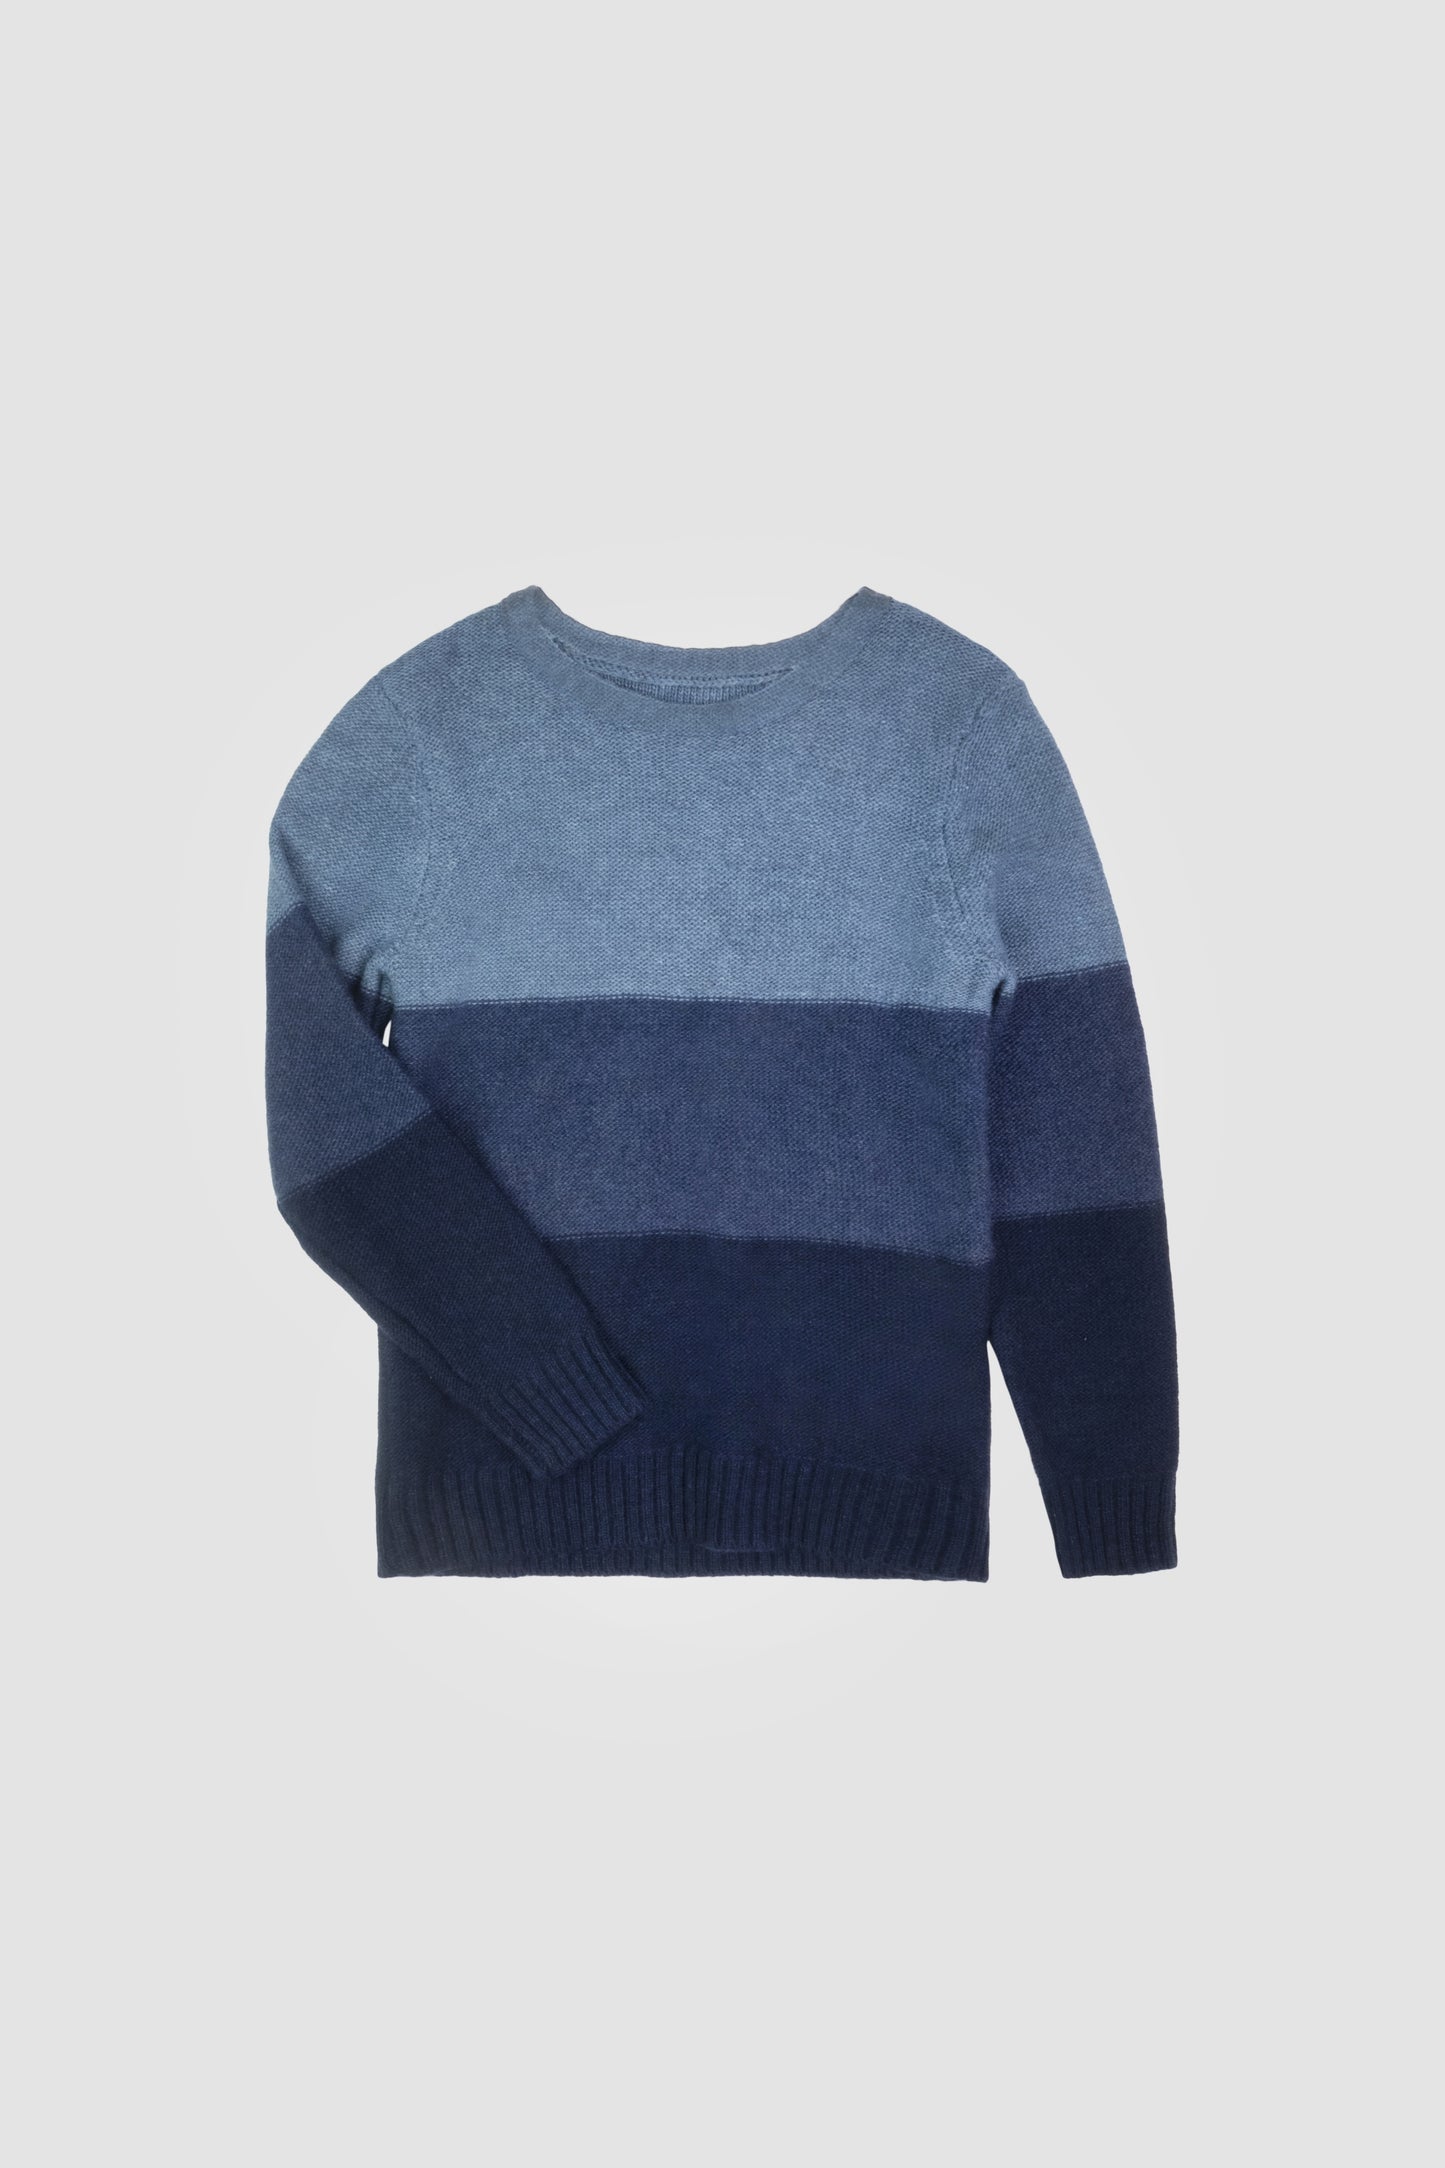 Appaman sweater, 3 shades of blue